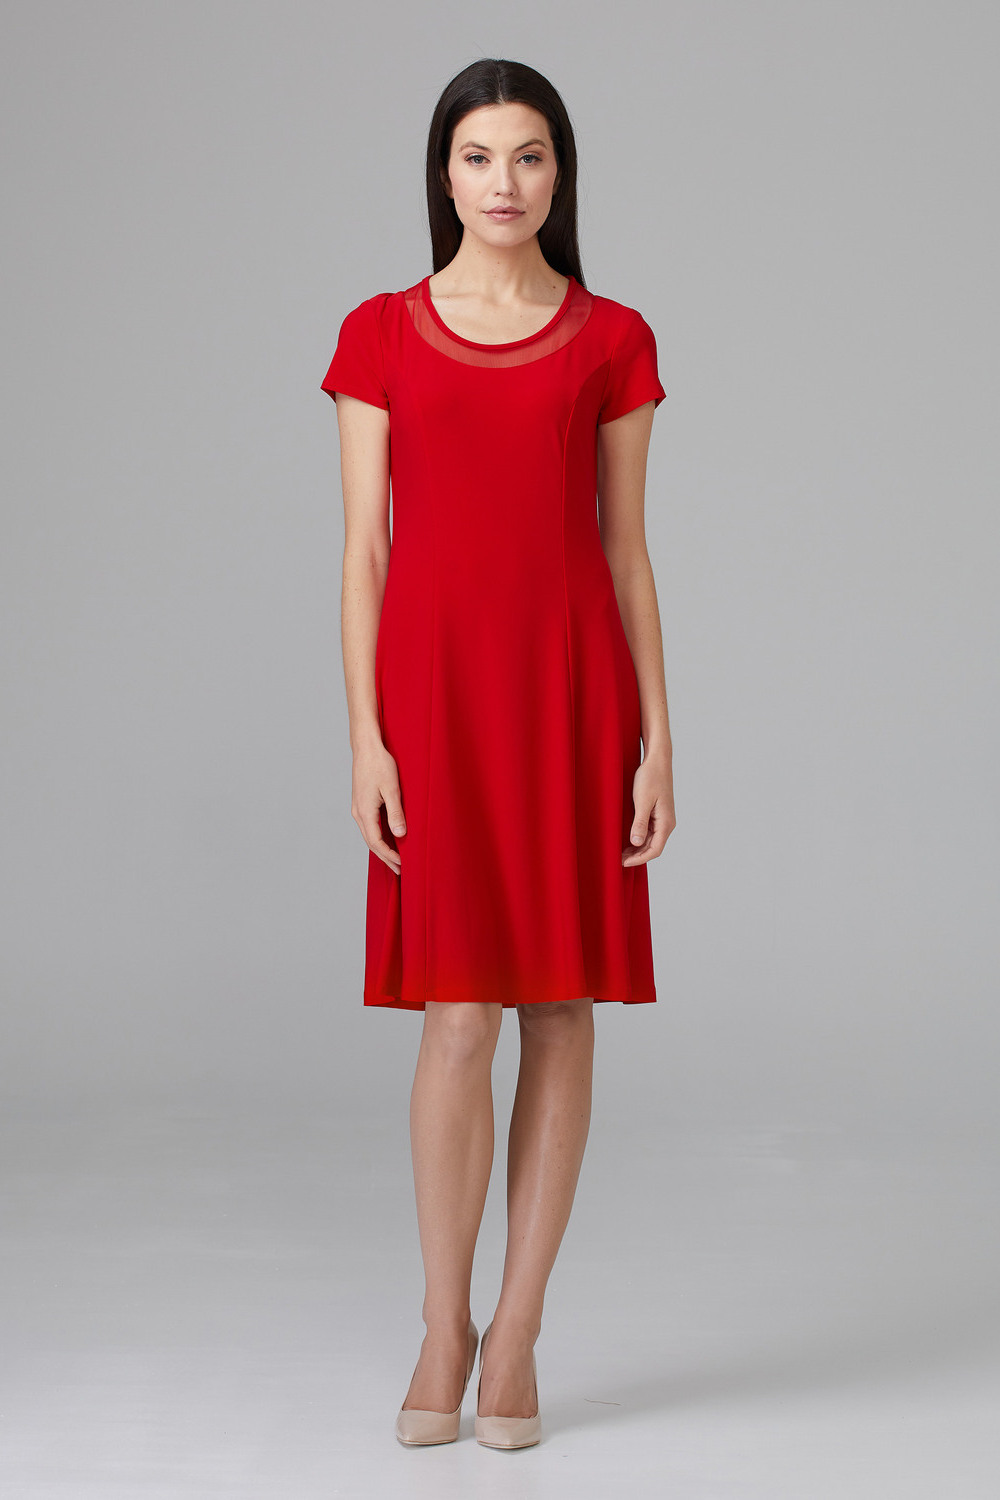 Joseph Ribkoff Dress Style 201468. Lipstick Red 173